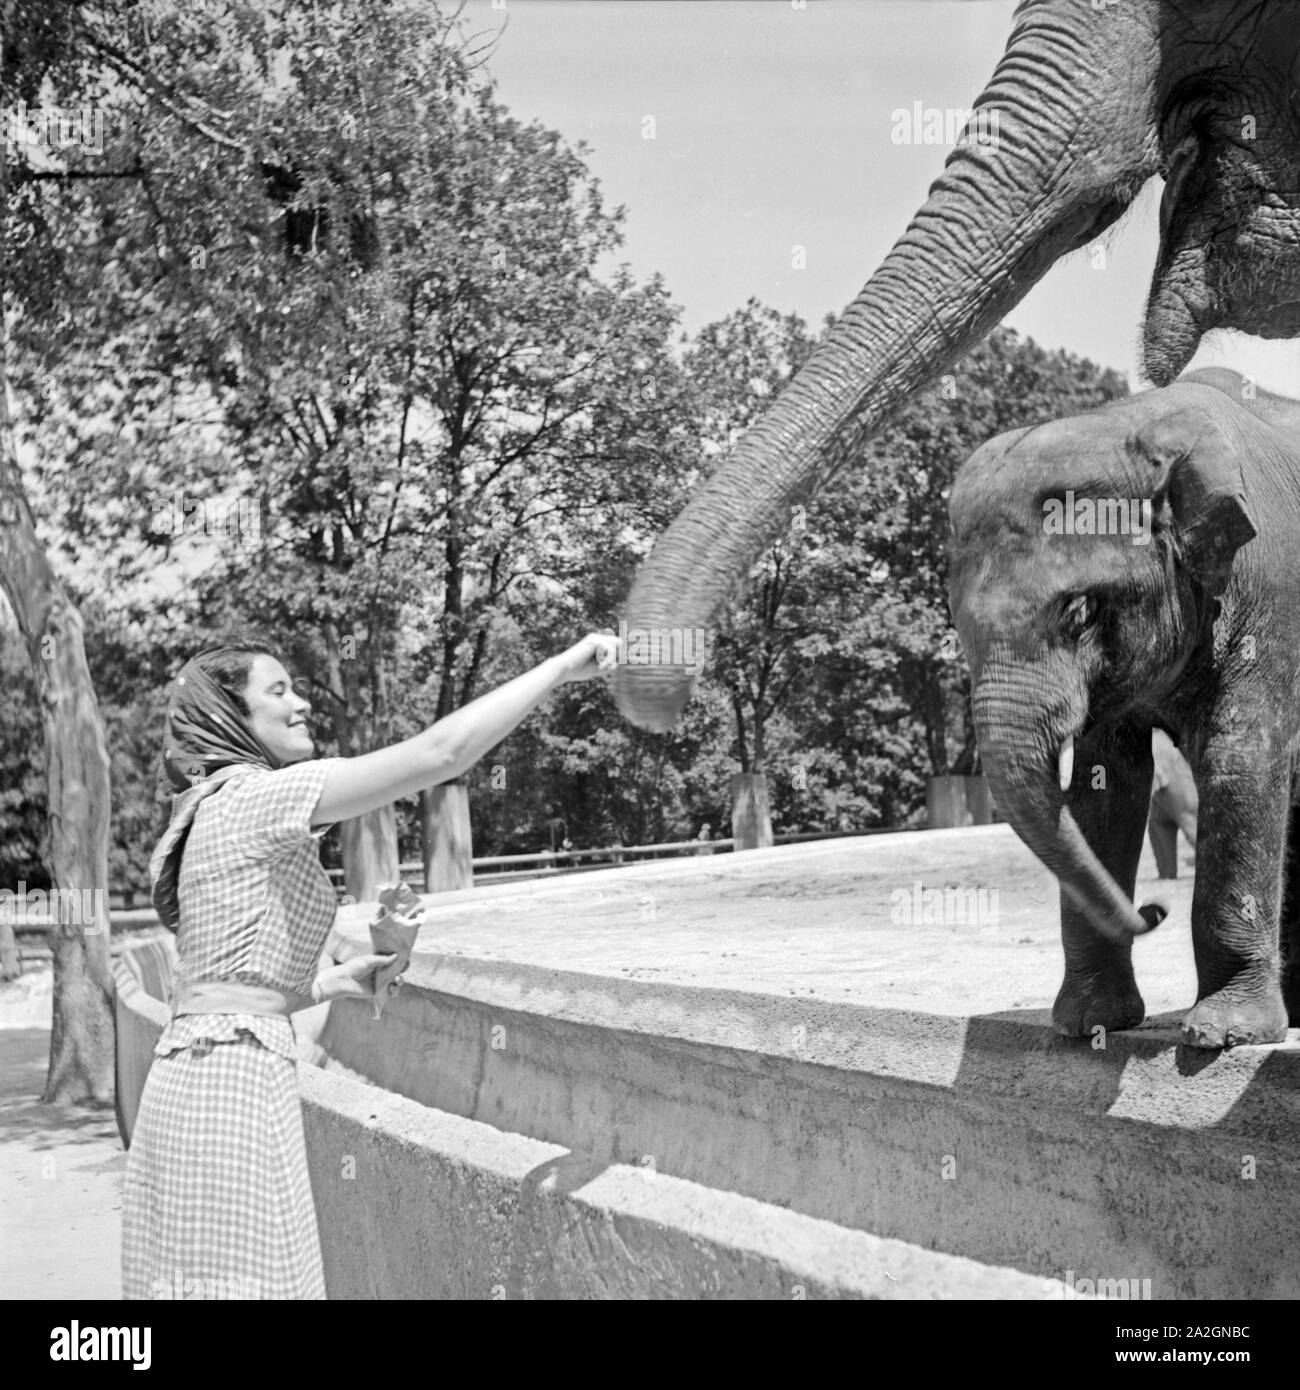 Eine junge Frau füttert eine Erdnuß un einen Elefanten im Zoo, Deutschland 1930er Jahre. Una giovane donna presso i giardini zoologici di alimentazione di arachidi per un elefante, Germania 1930s. Foto Stock